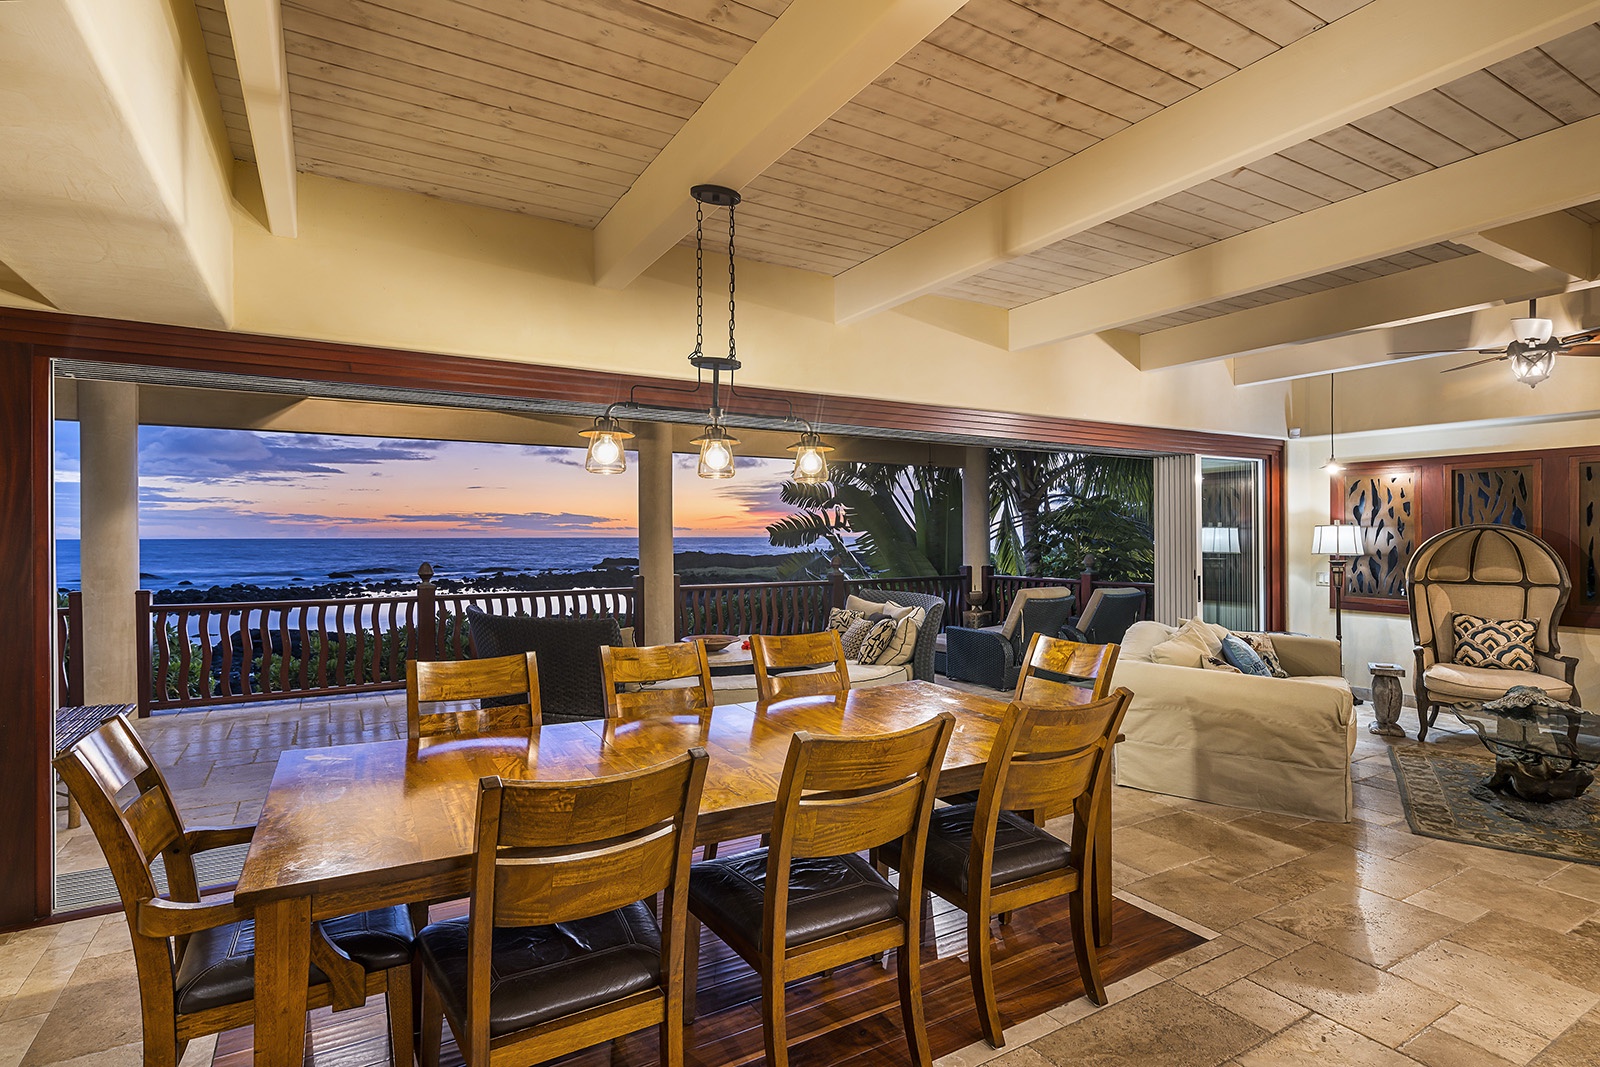 Kailua Kona Vacation Rentals, Mermaid Cove - Twilight dining for 8!